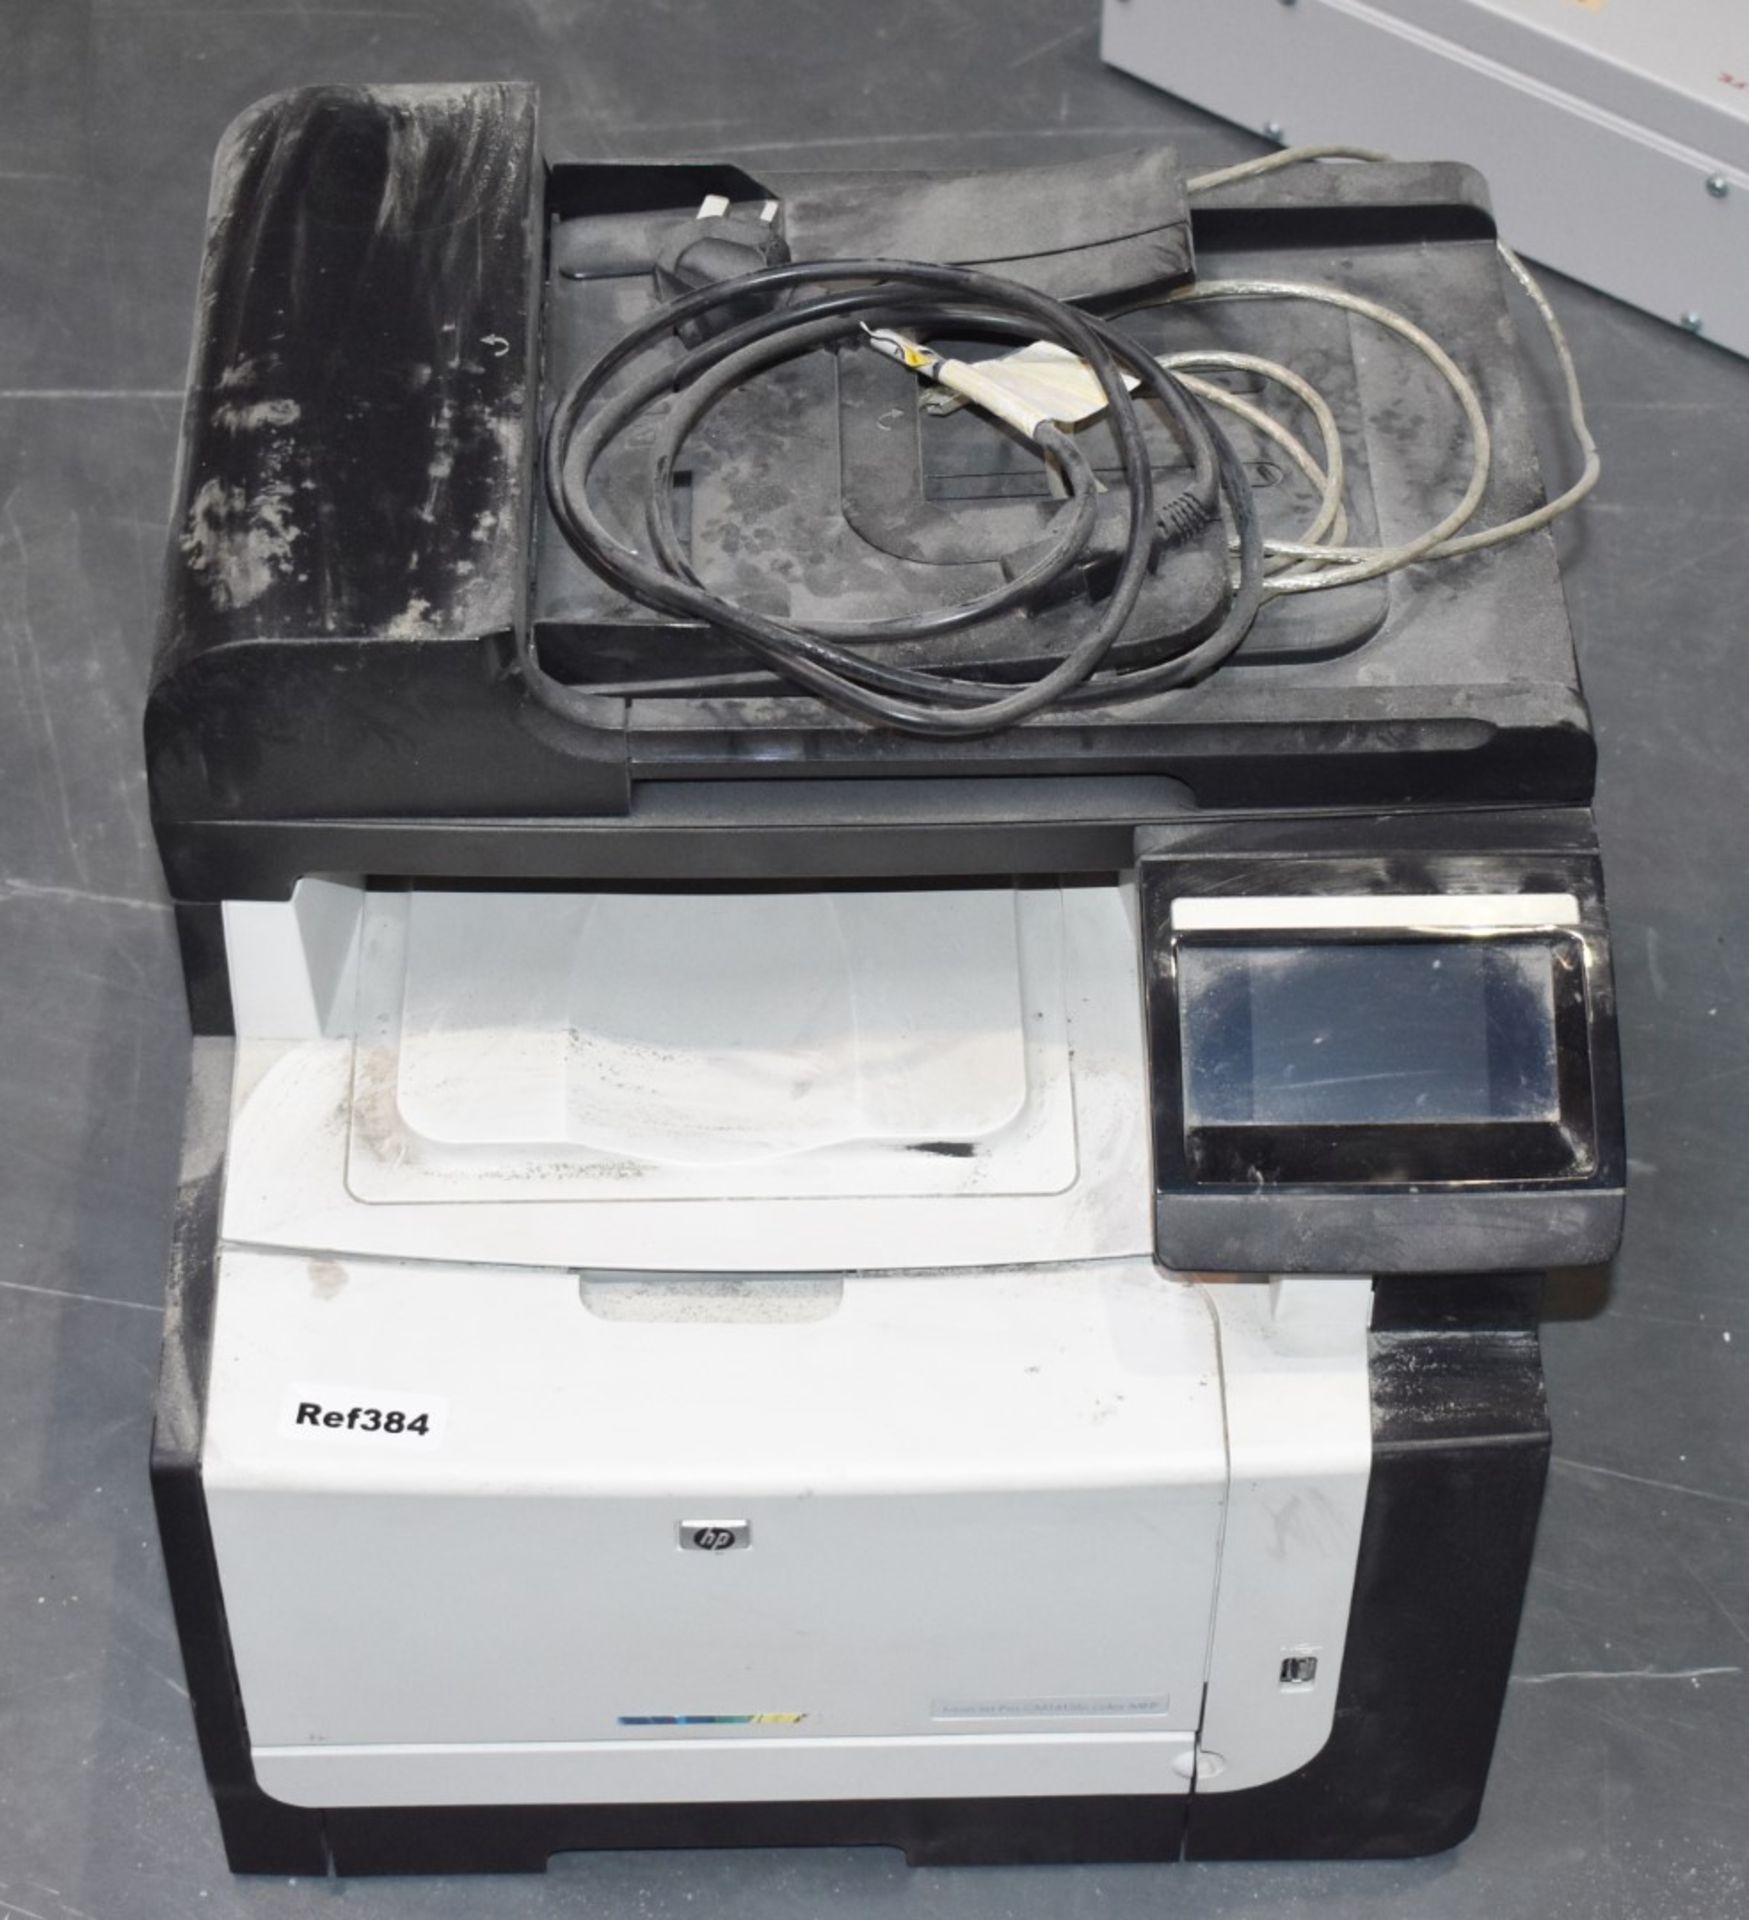 1 x HP LaserJet Pro CM1415fn Colour Multifunction Printer - Ref 384 - CL501 - Location: Warrington